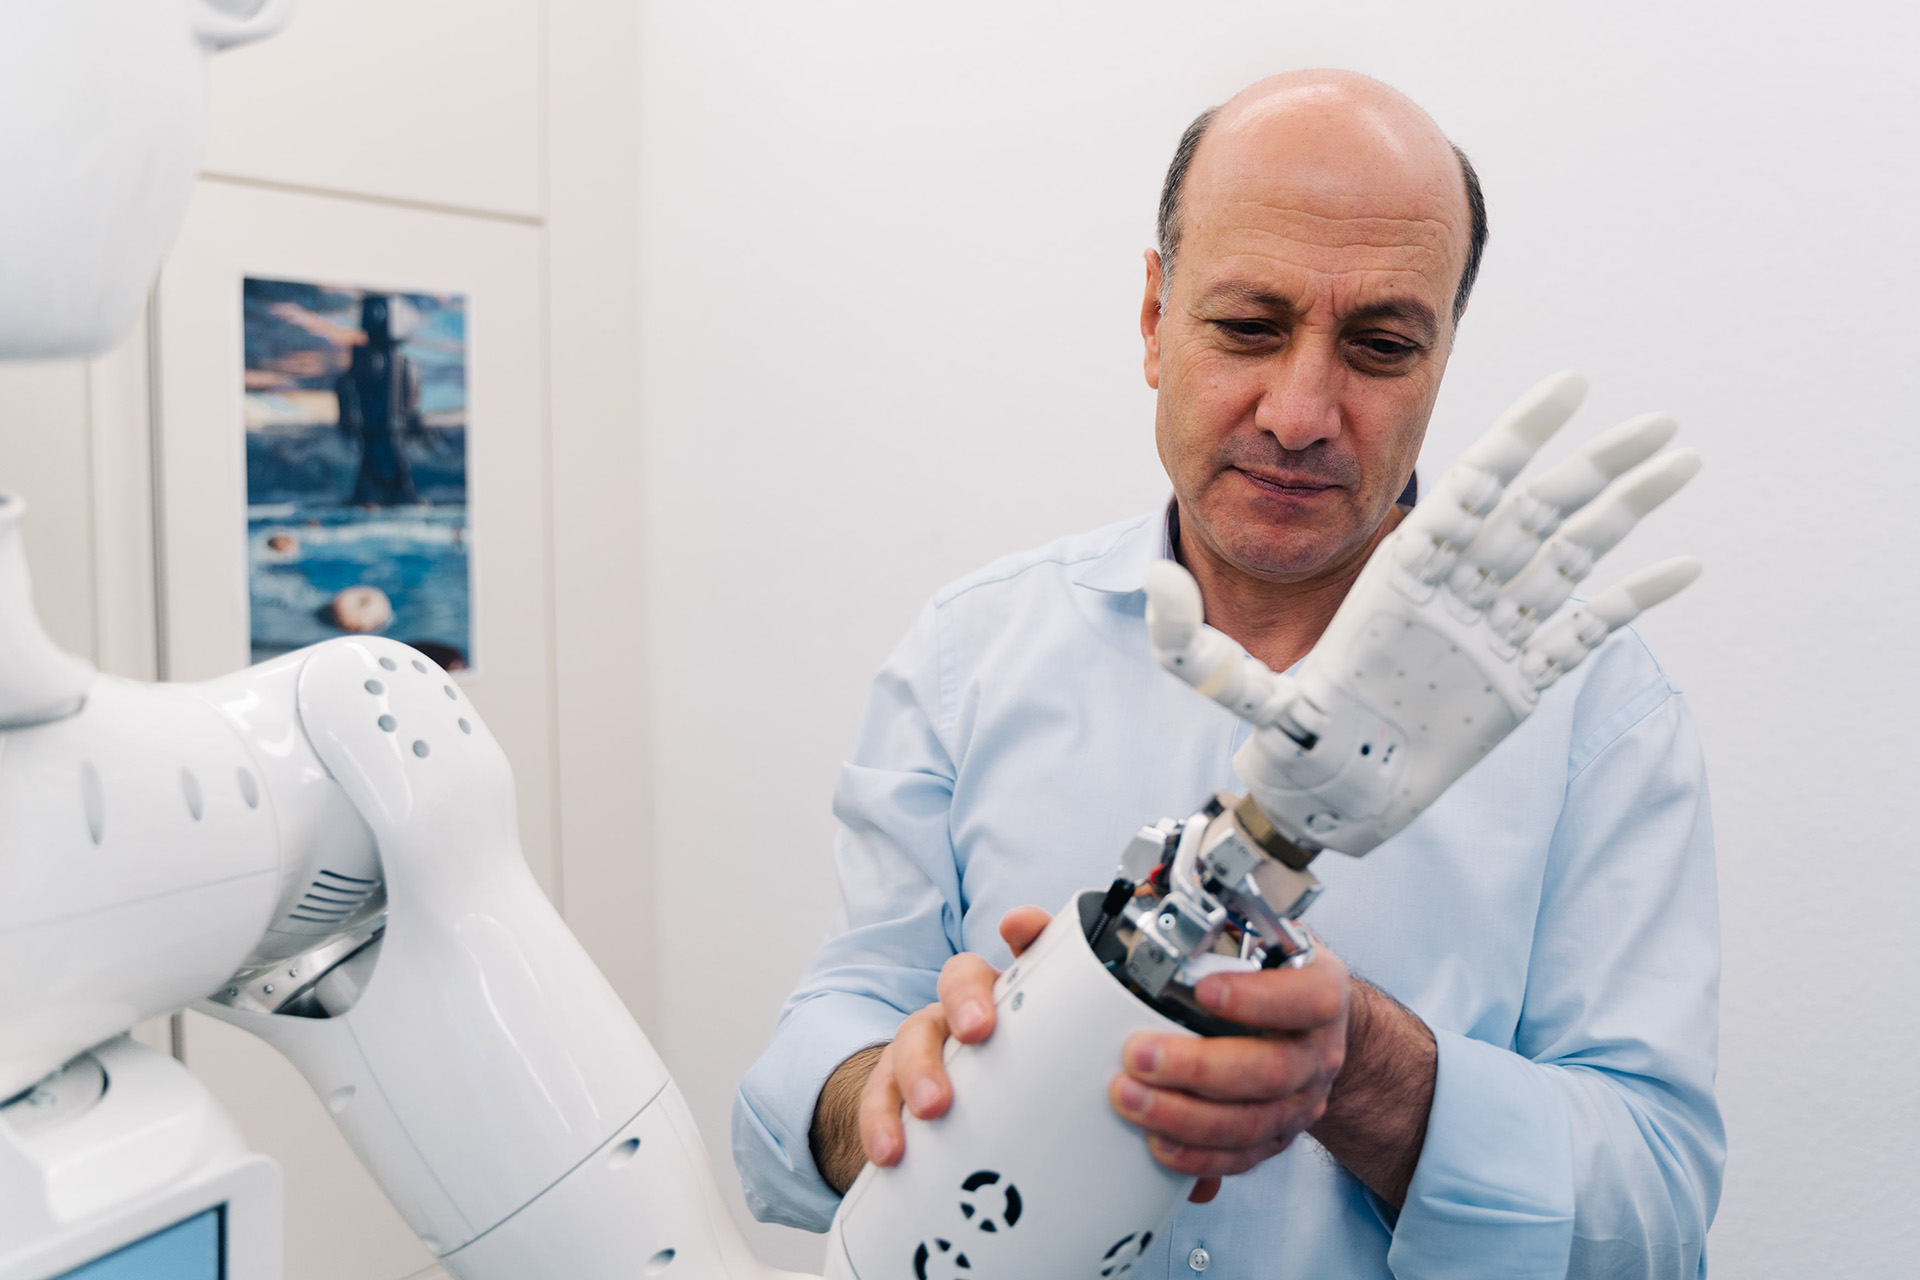 Prof. Dr. Tamim Asfour develops robots for elderly care